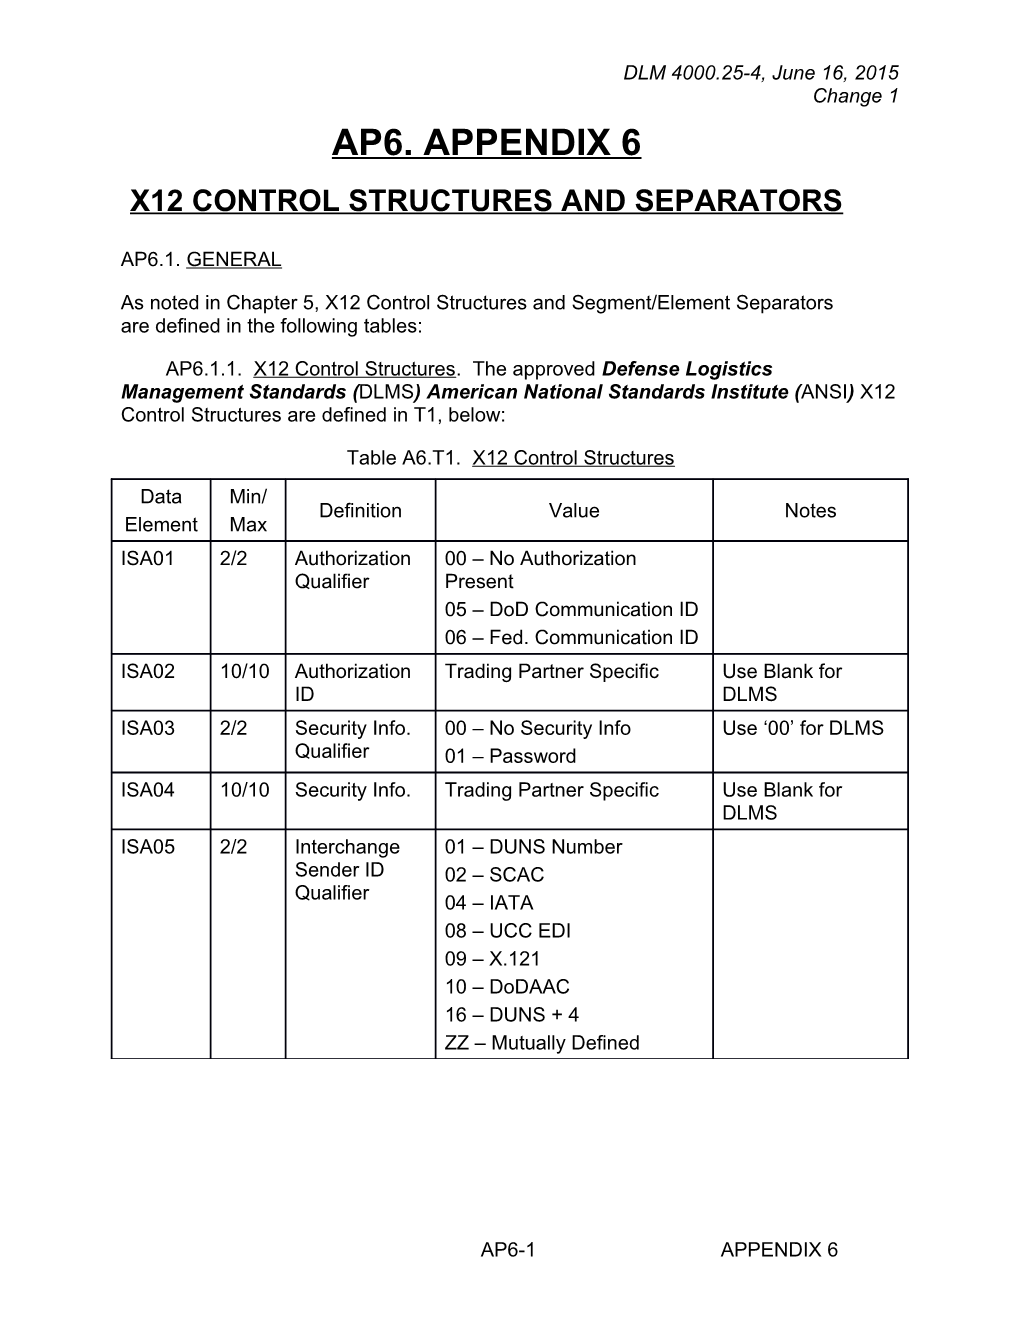 Appendix 6 - X12 Control Structures and Separators